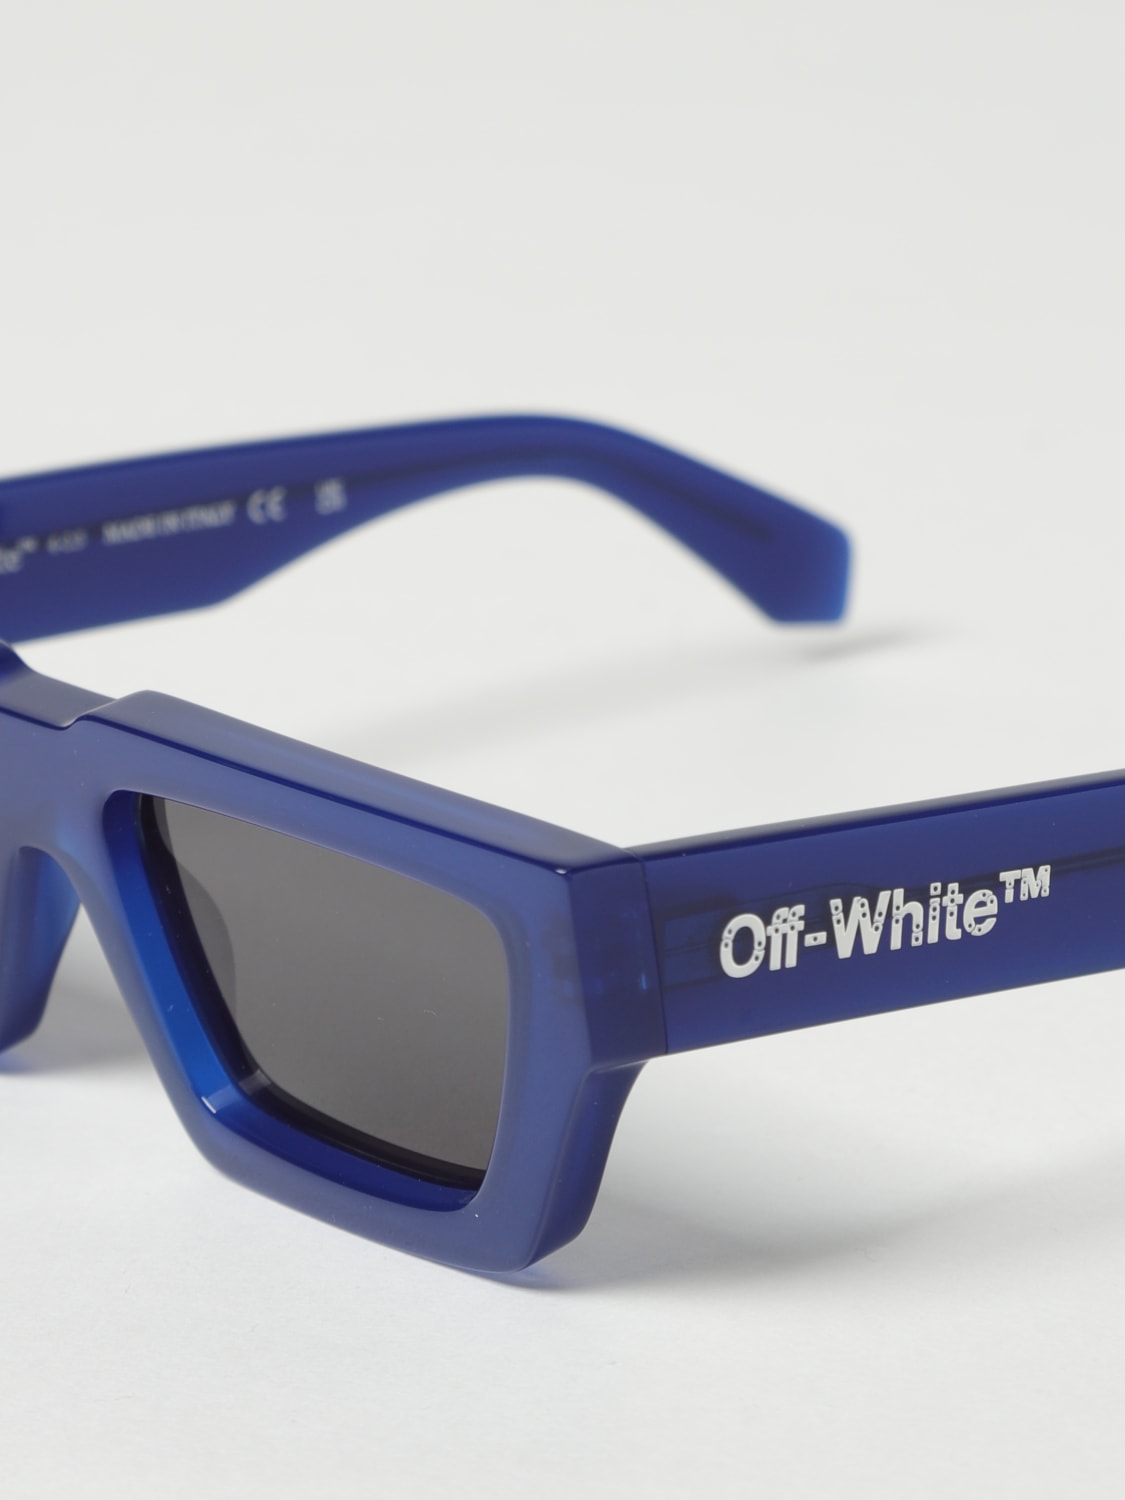 off white sunglasses blue